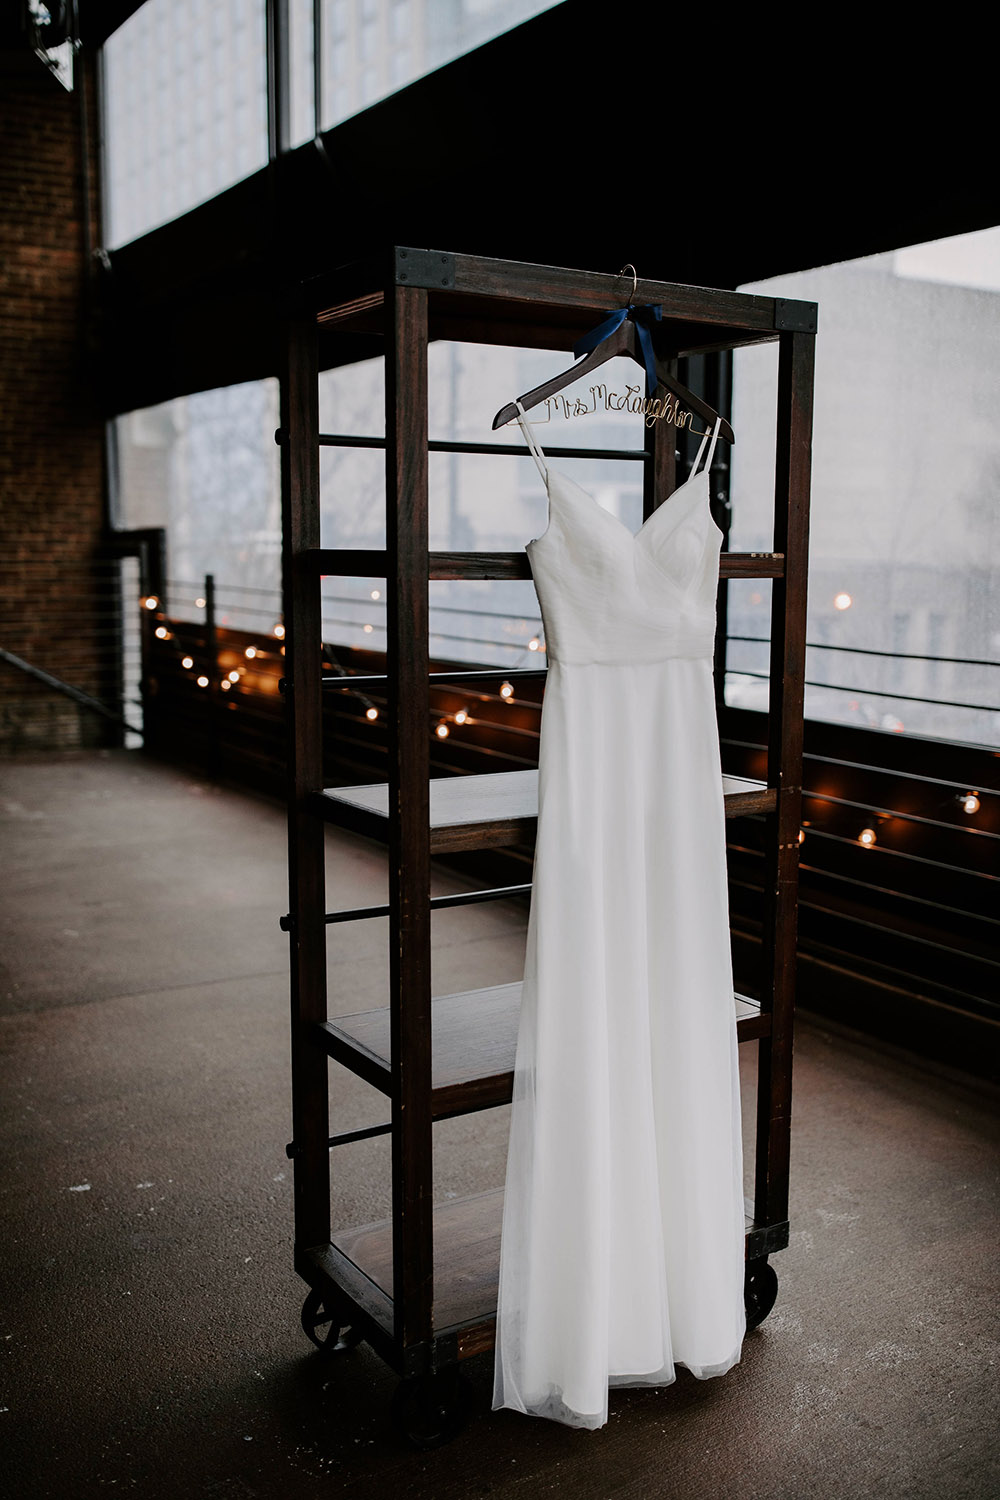 Wedding Dress Hanging on Shelf